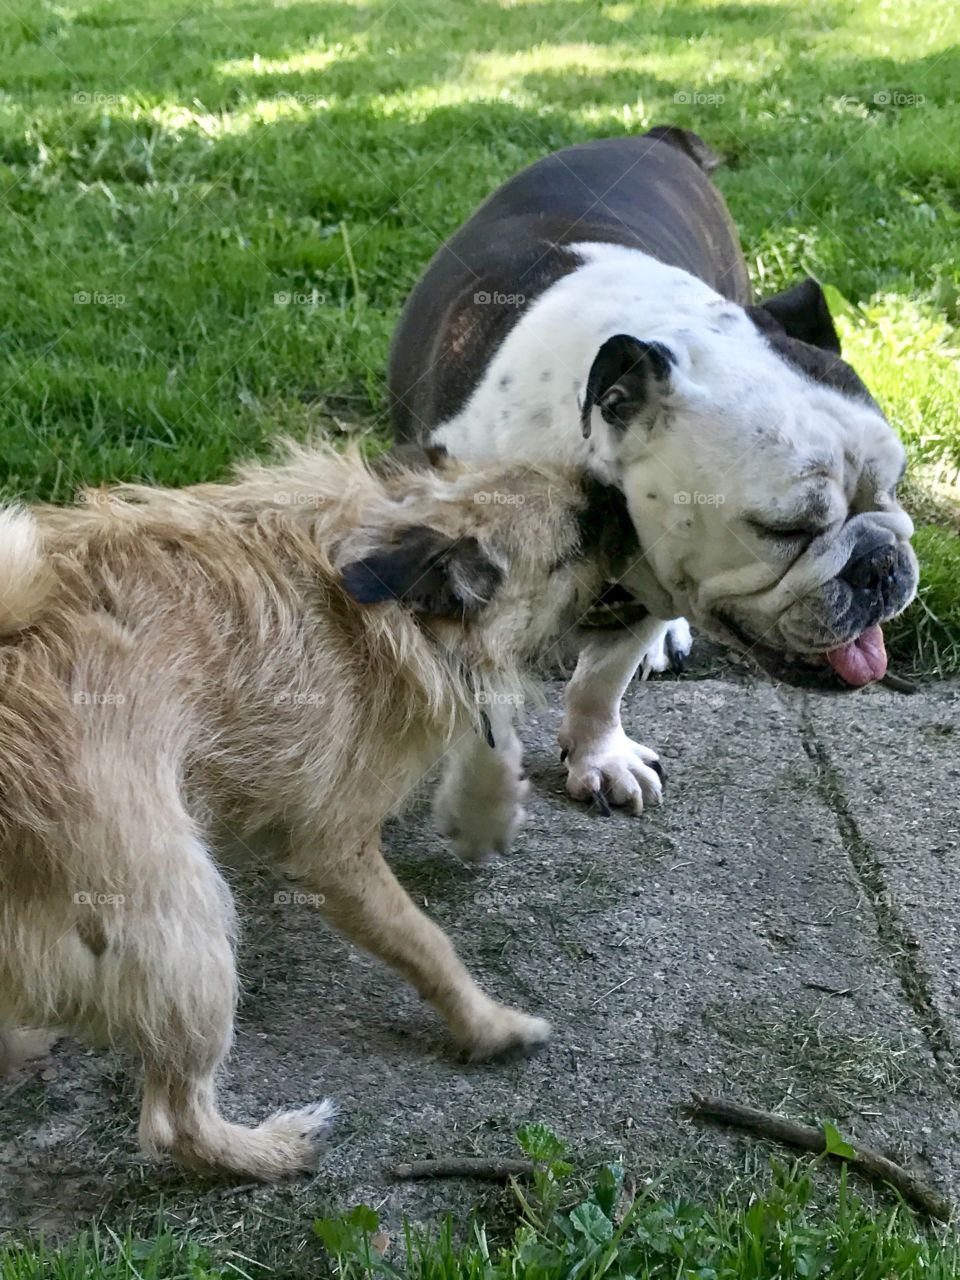 Dog play fighting 